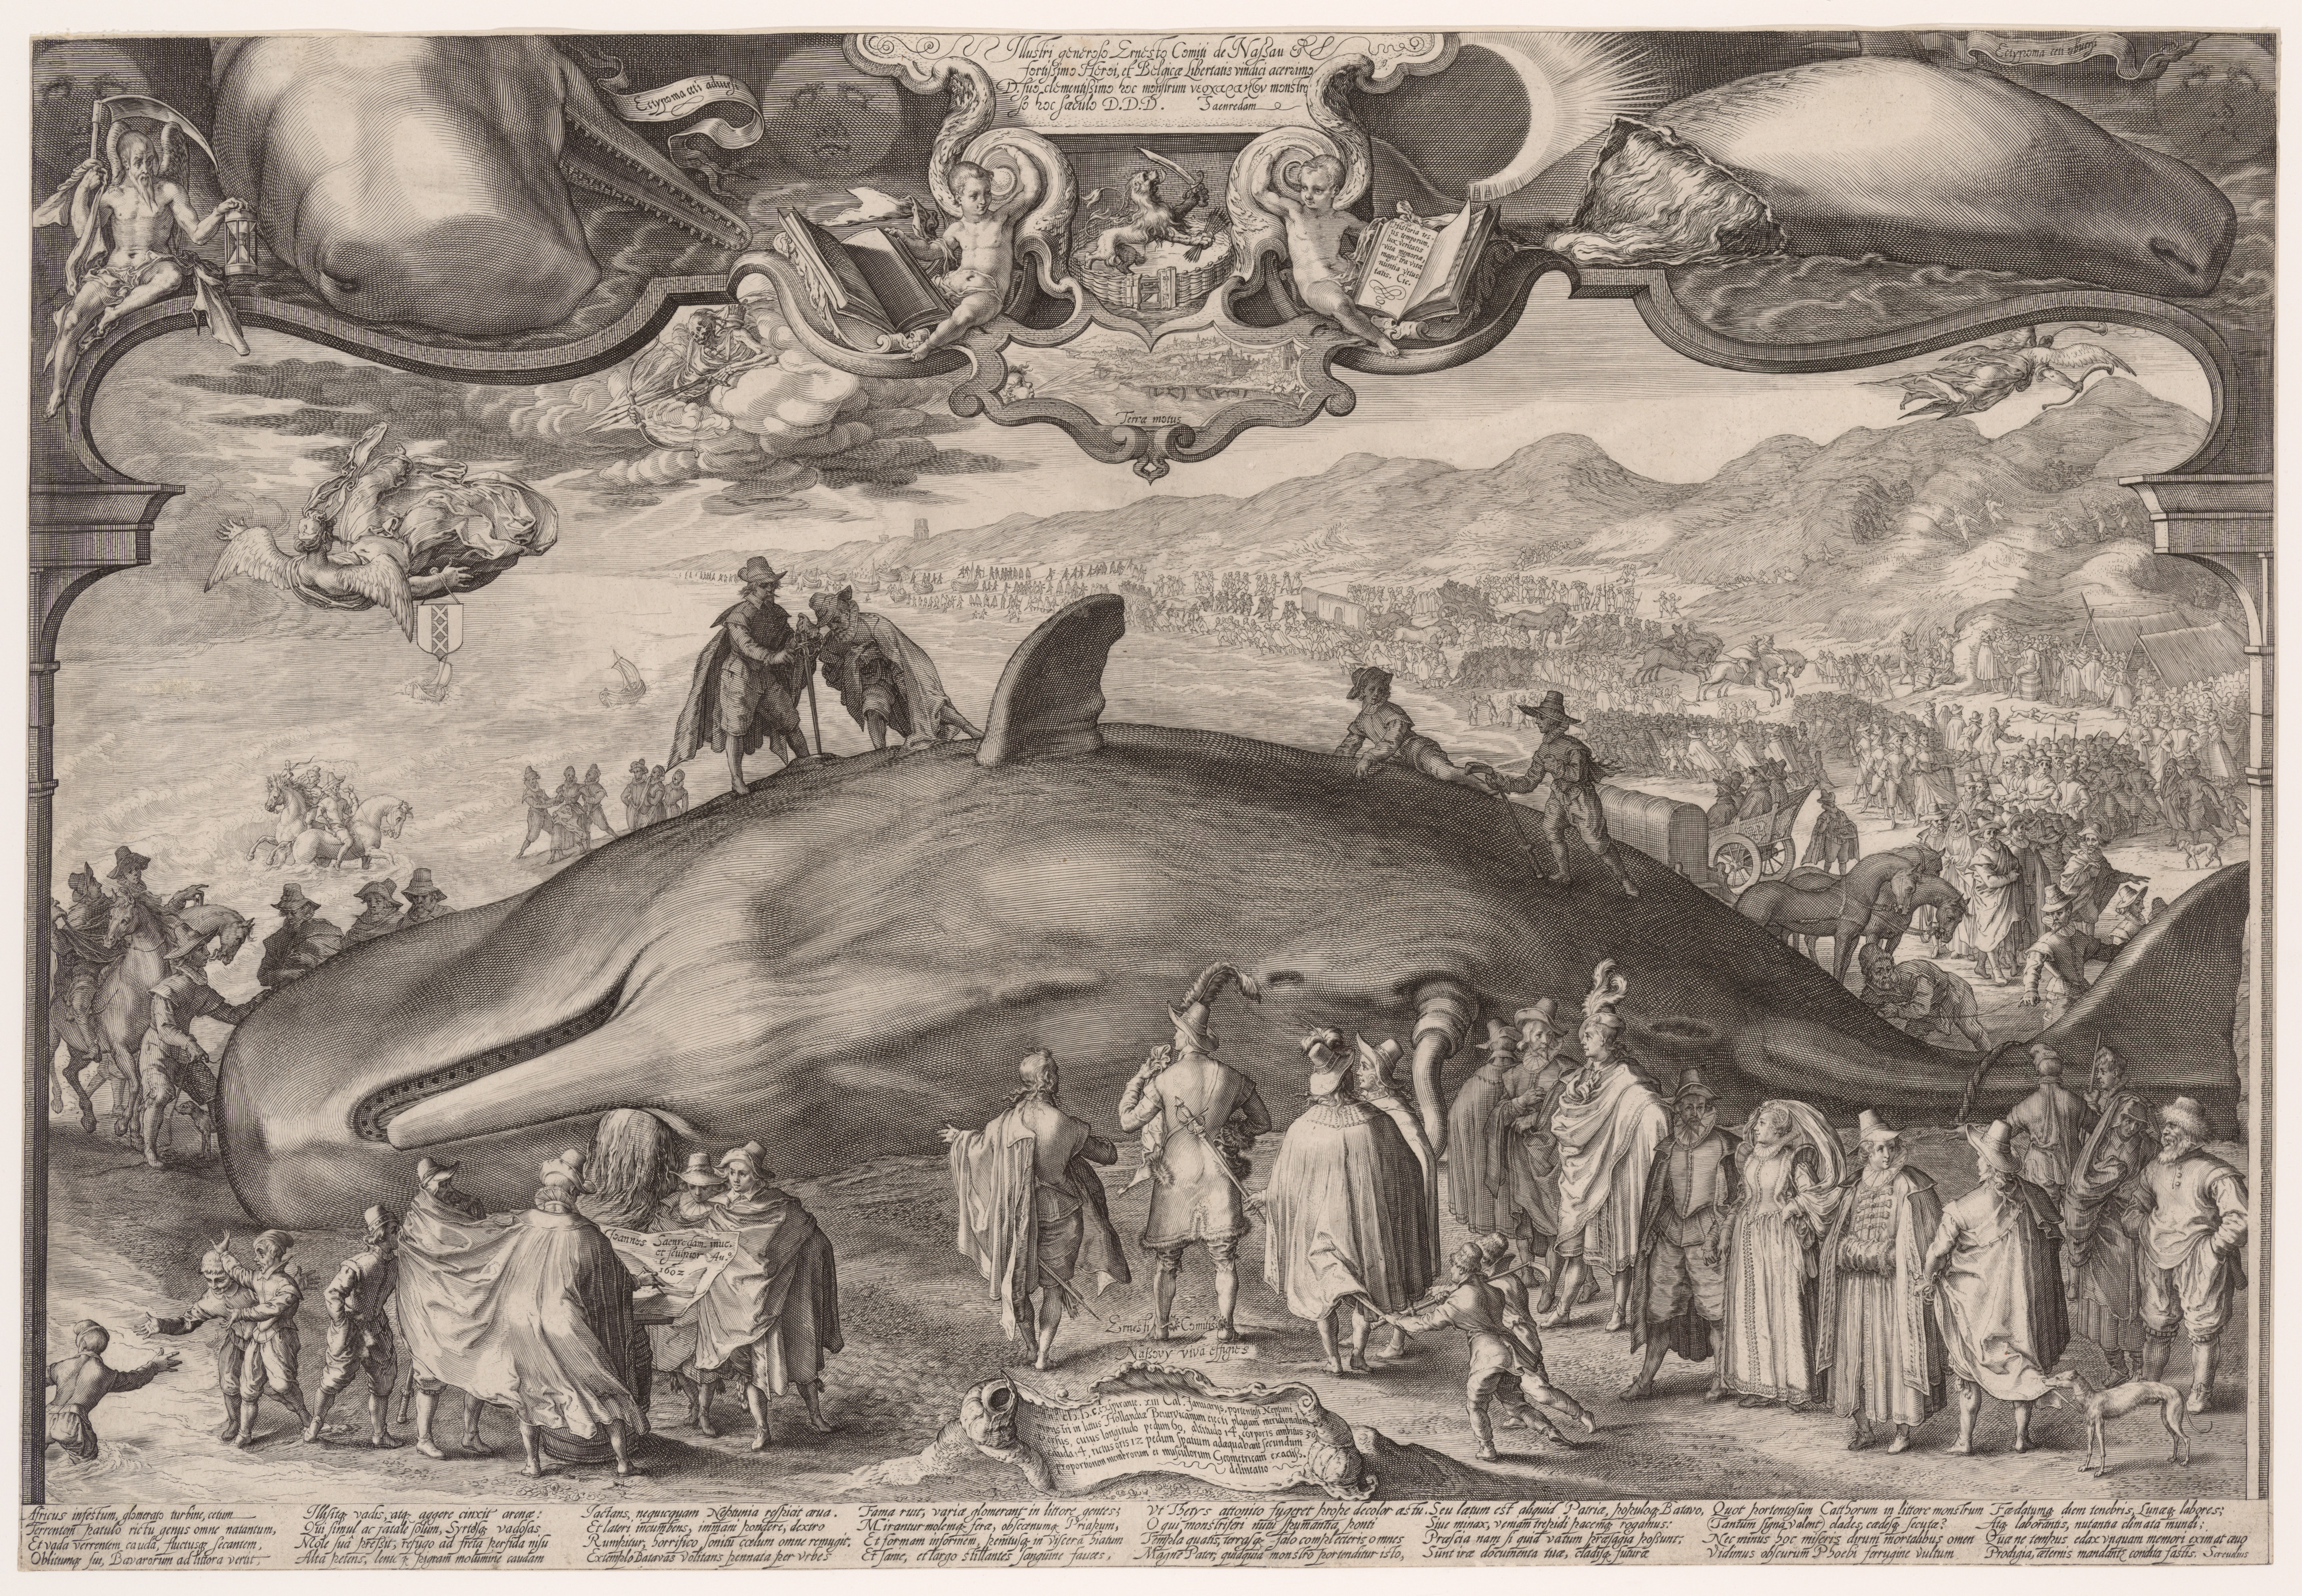 Whale Stranding Concept Art - Death Stranding Art Gallery